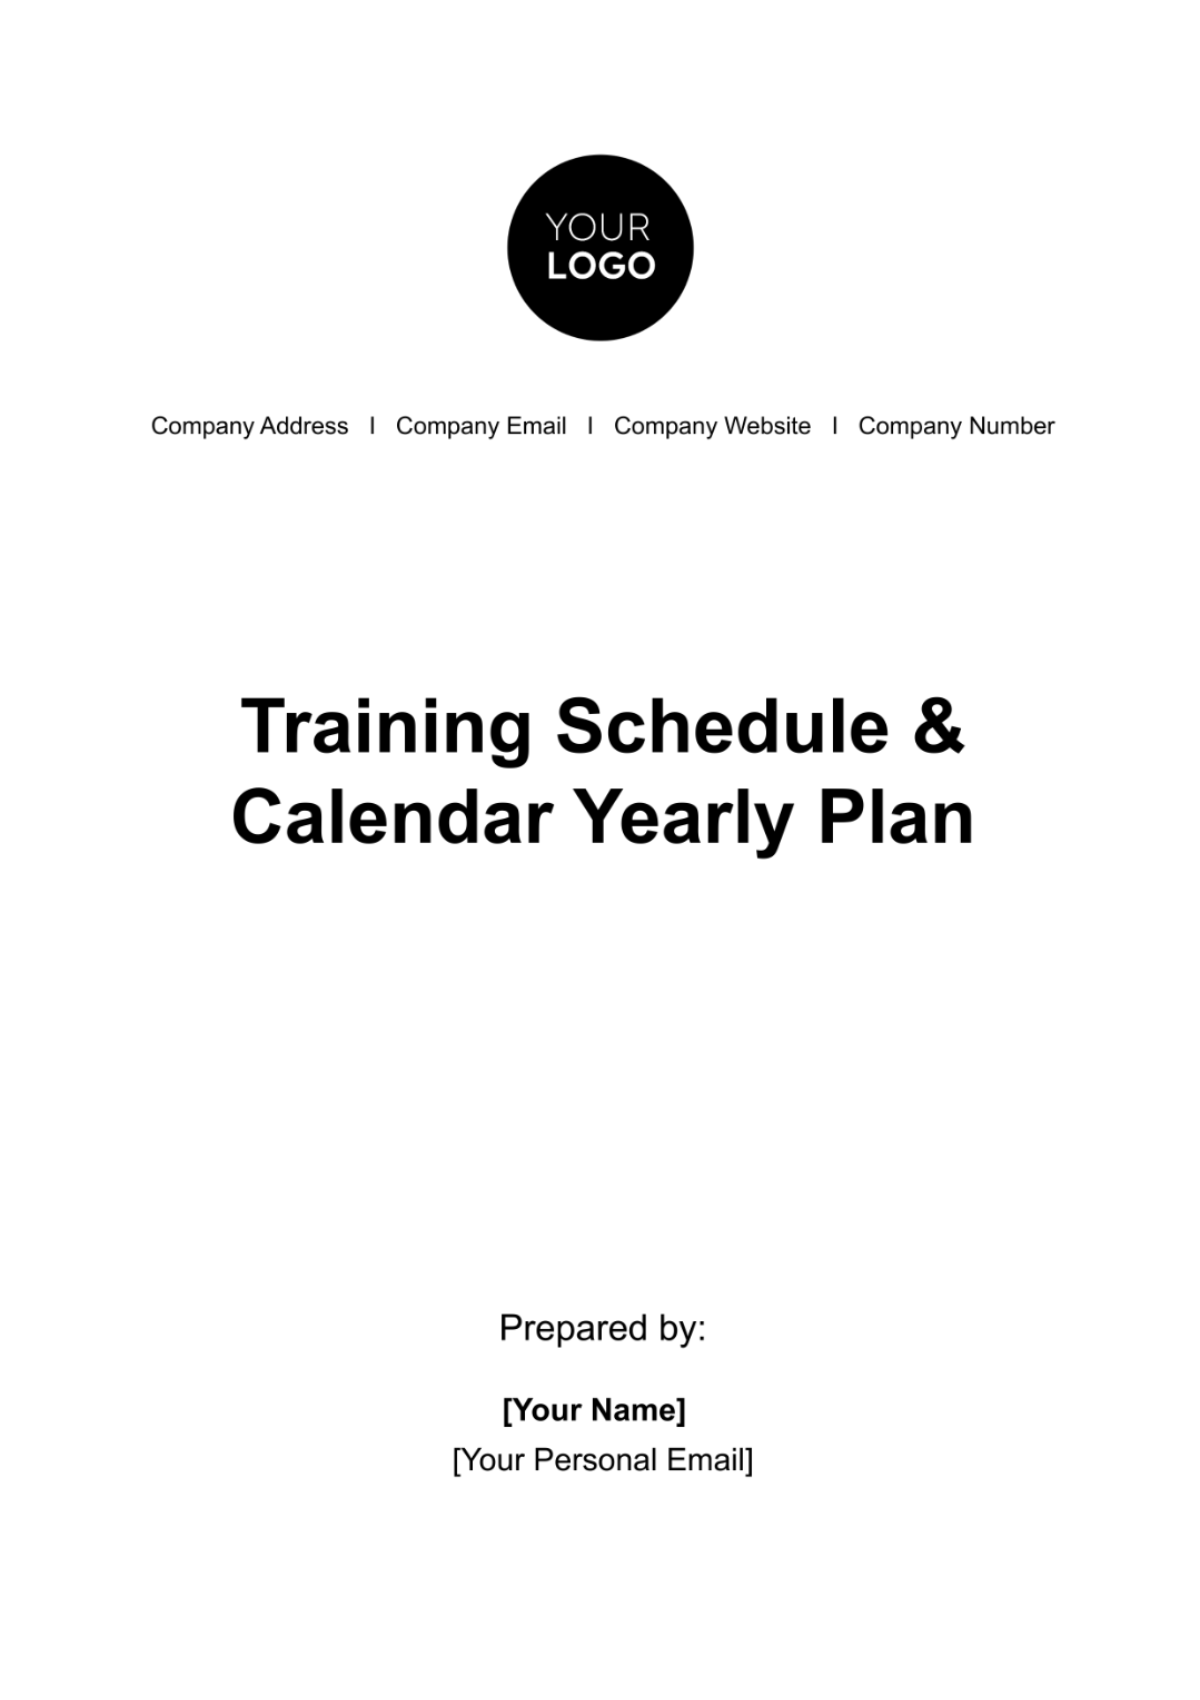 Free Training Schedule & Calendar Yearly Plan HR Template